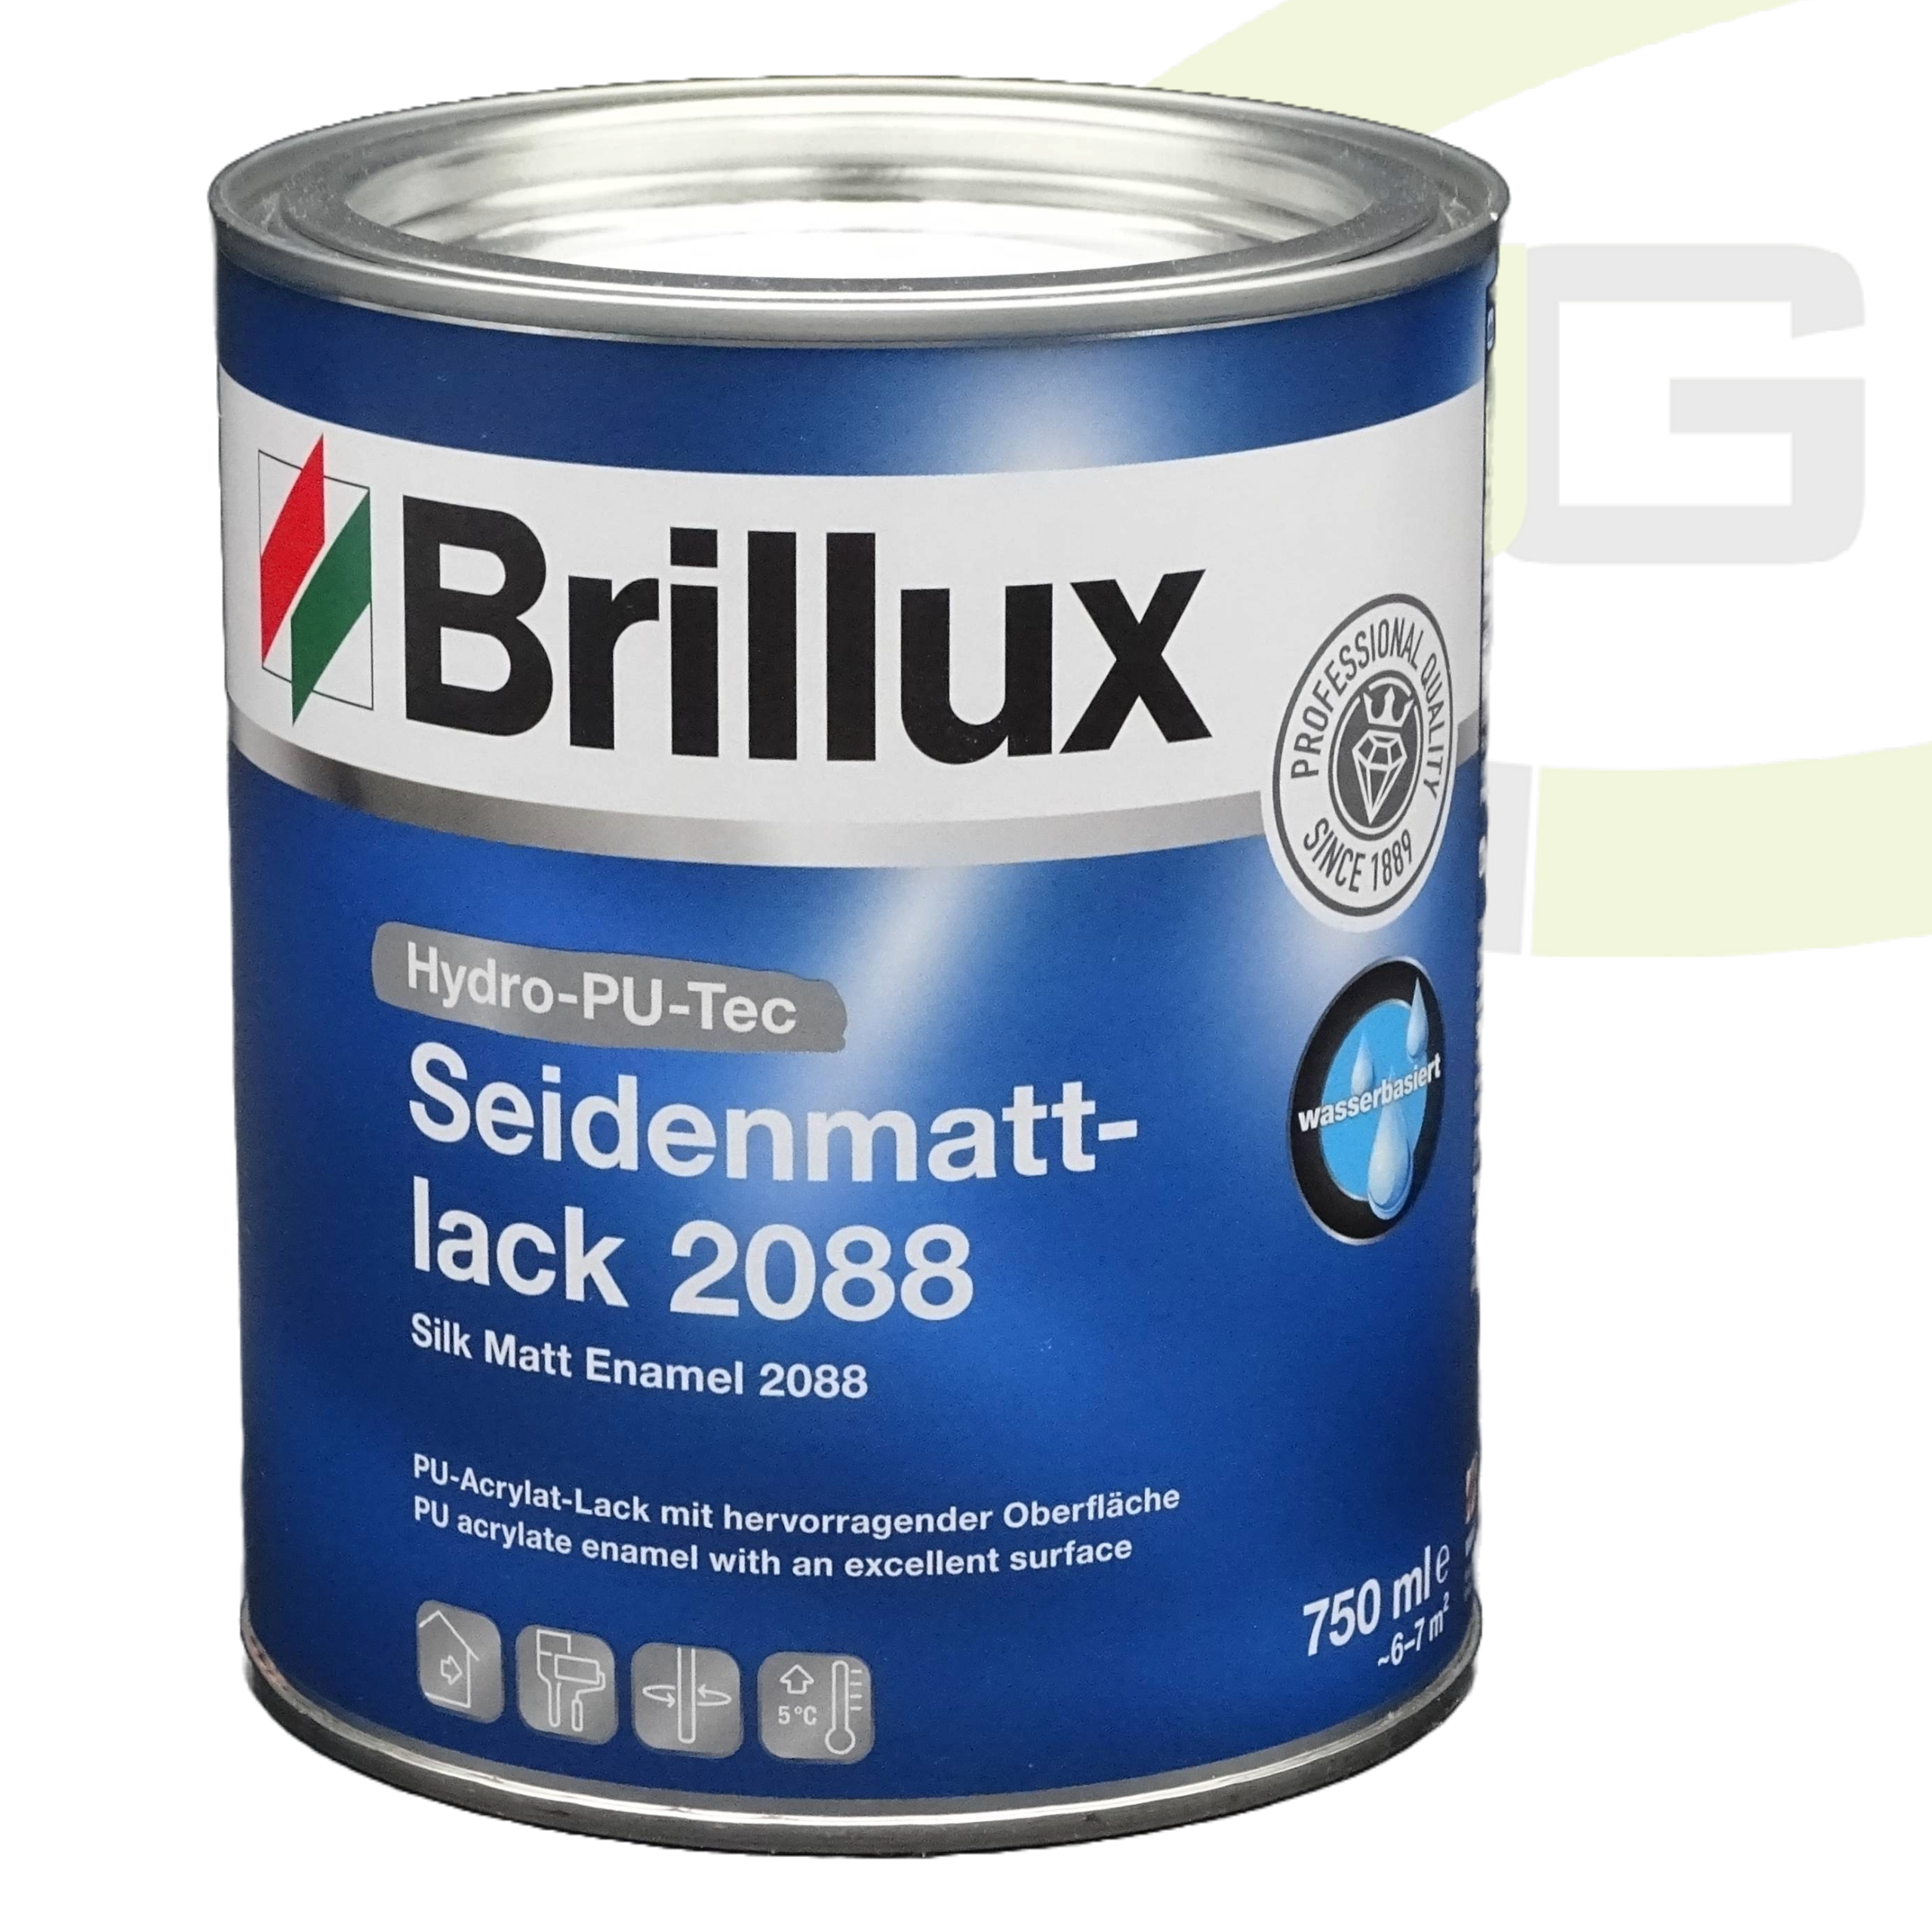 Brillux Hydro-PU-Tec Seidenmattlack 2088 - 750 ml / Wasserbasierter Endlack